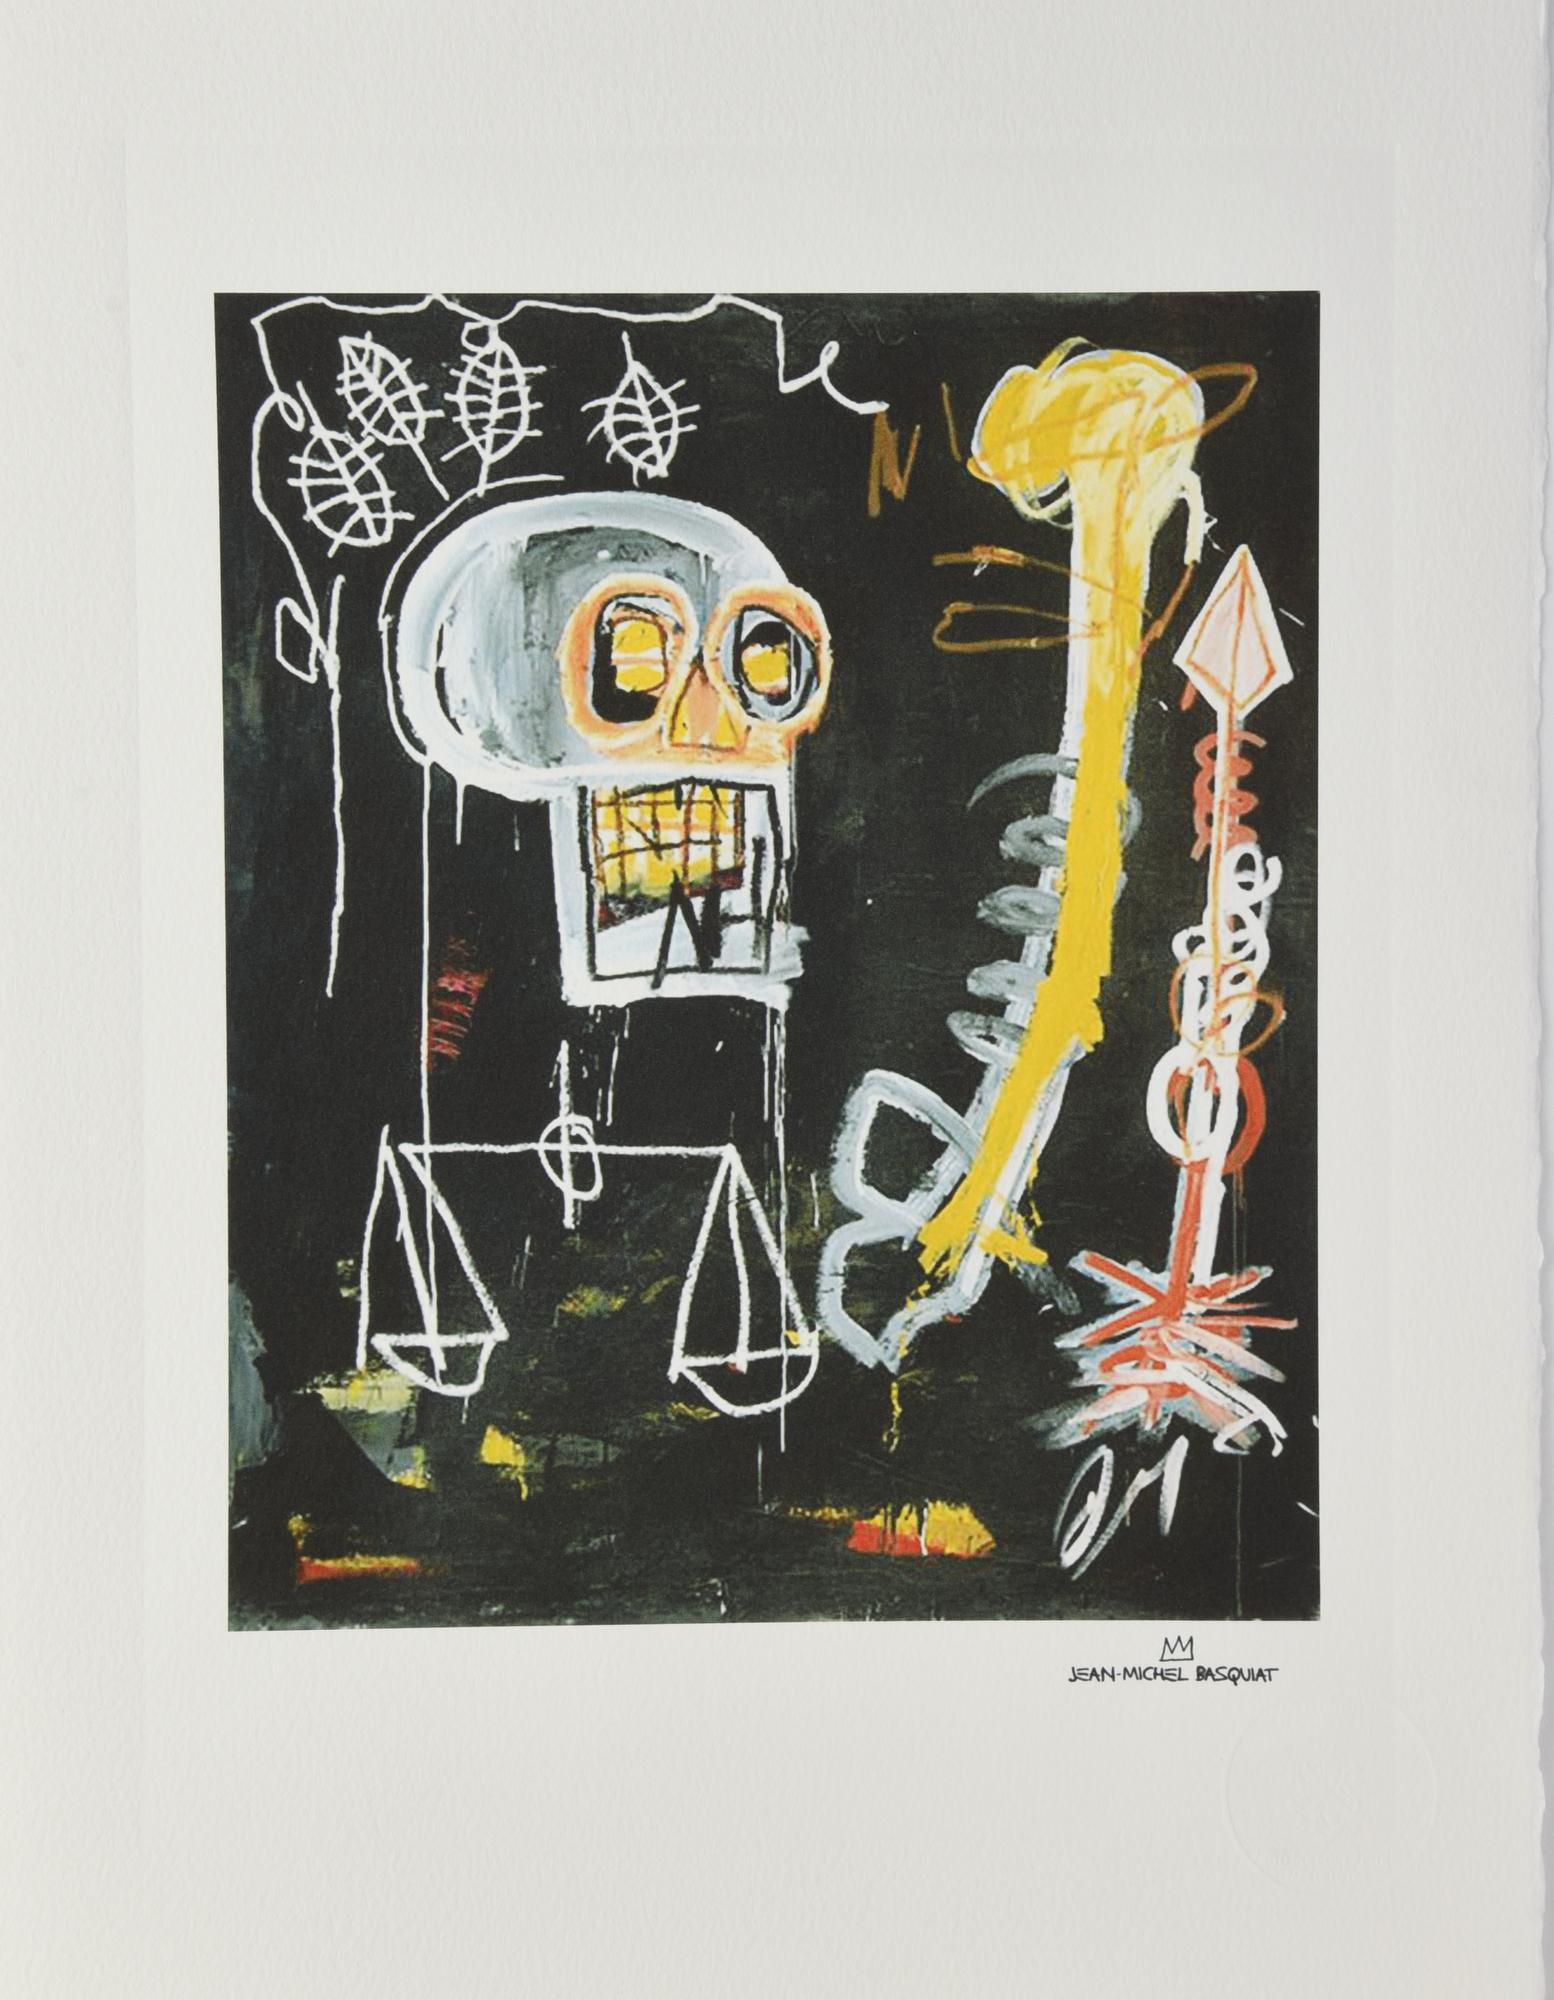 D'apres Jean Michel Basquiat BLACK SKULL fototipo eliografico, cm 37,5x28,5...